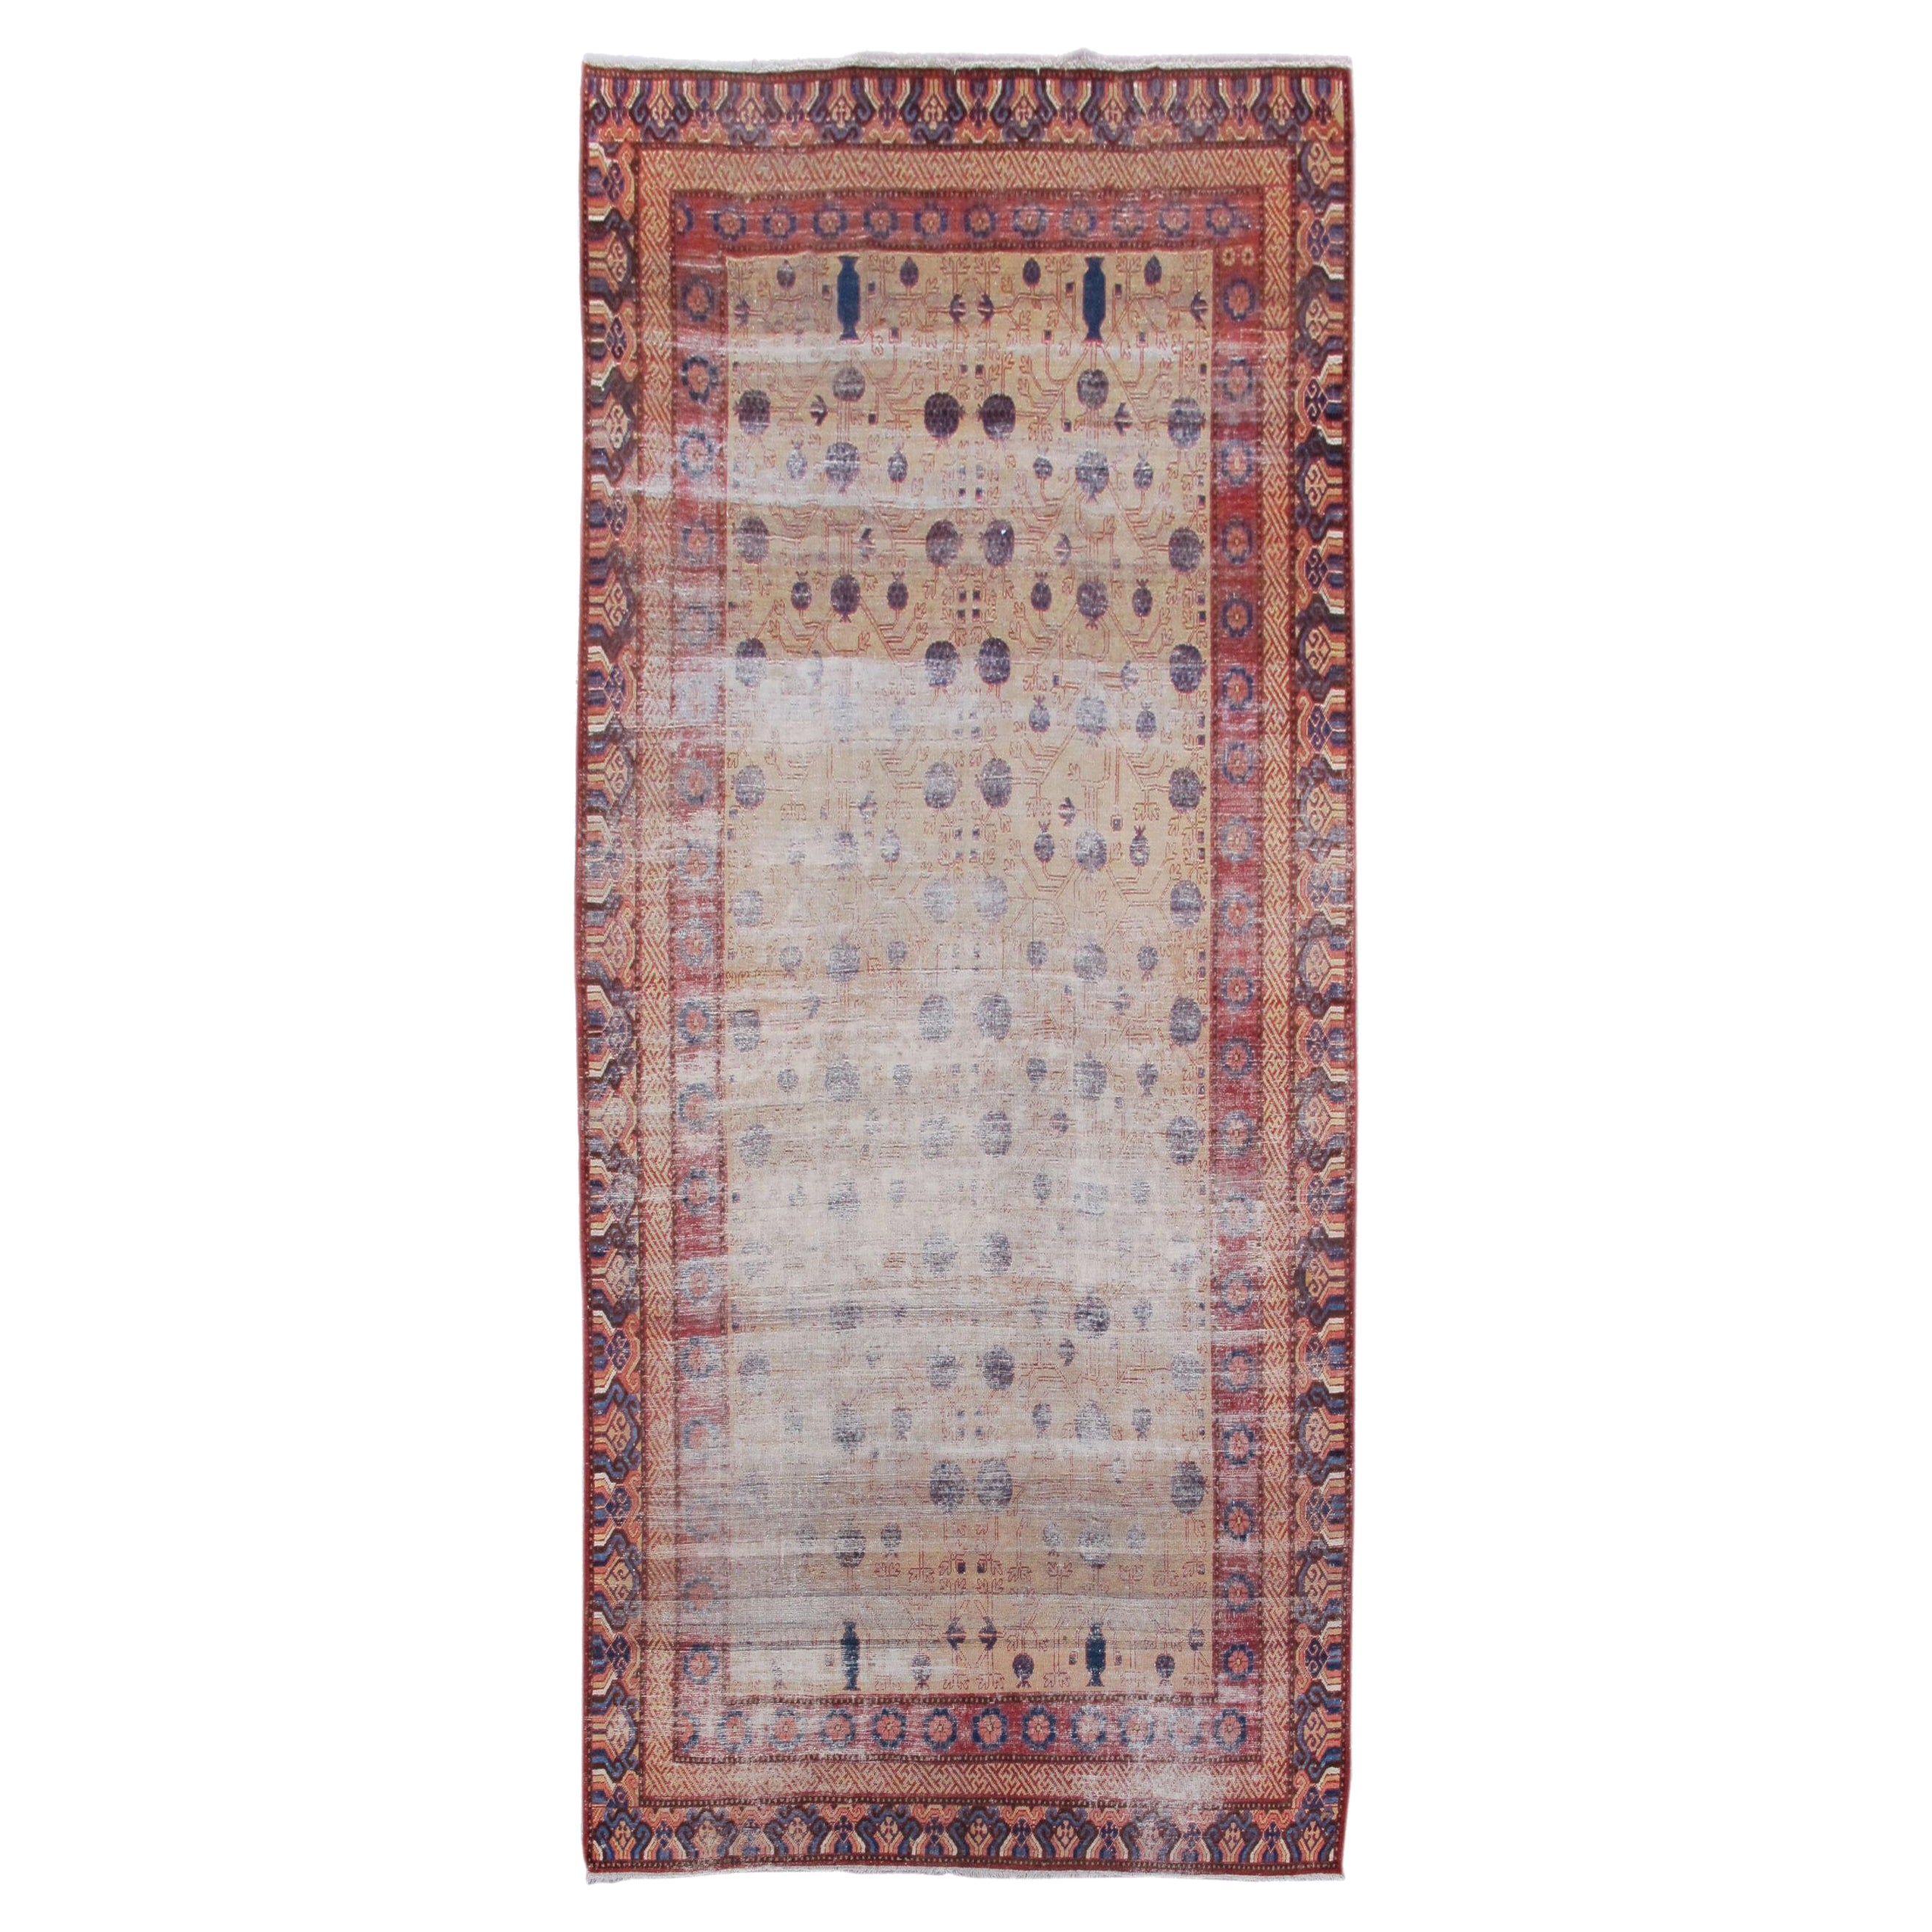 Antique Khotan Rug, Early 19th Century